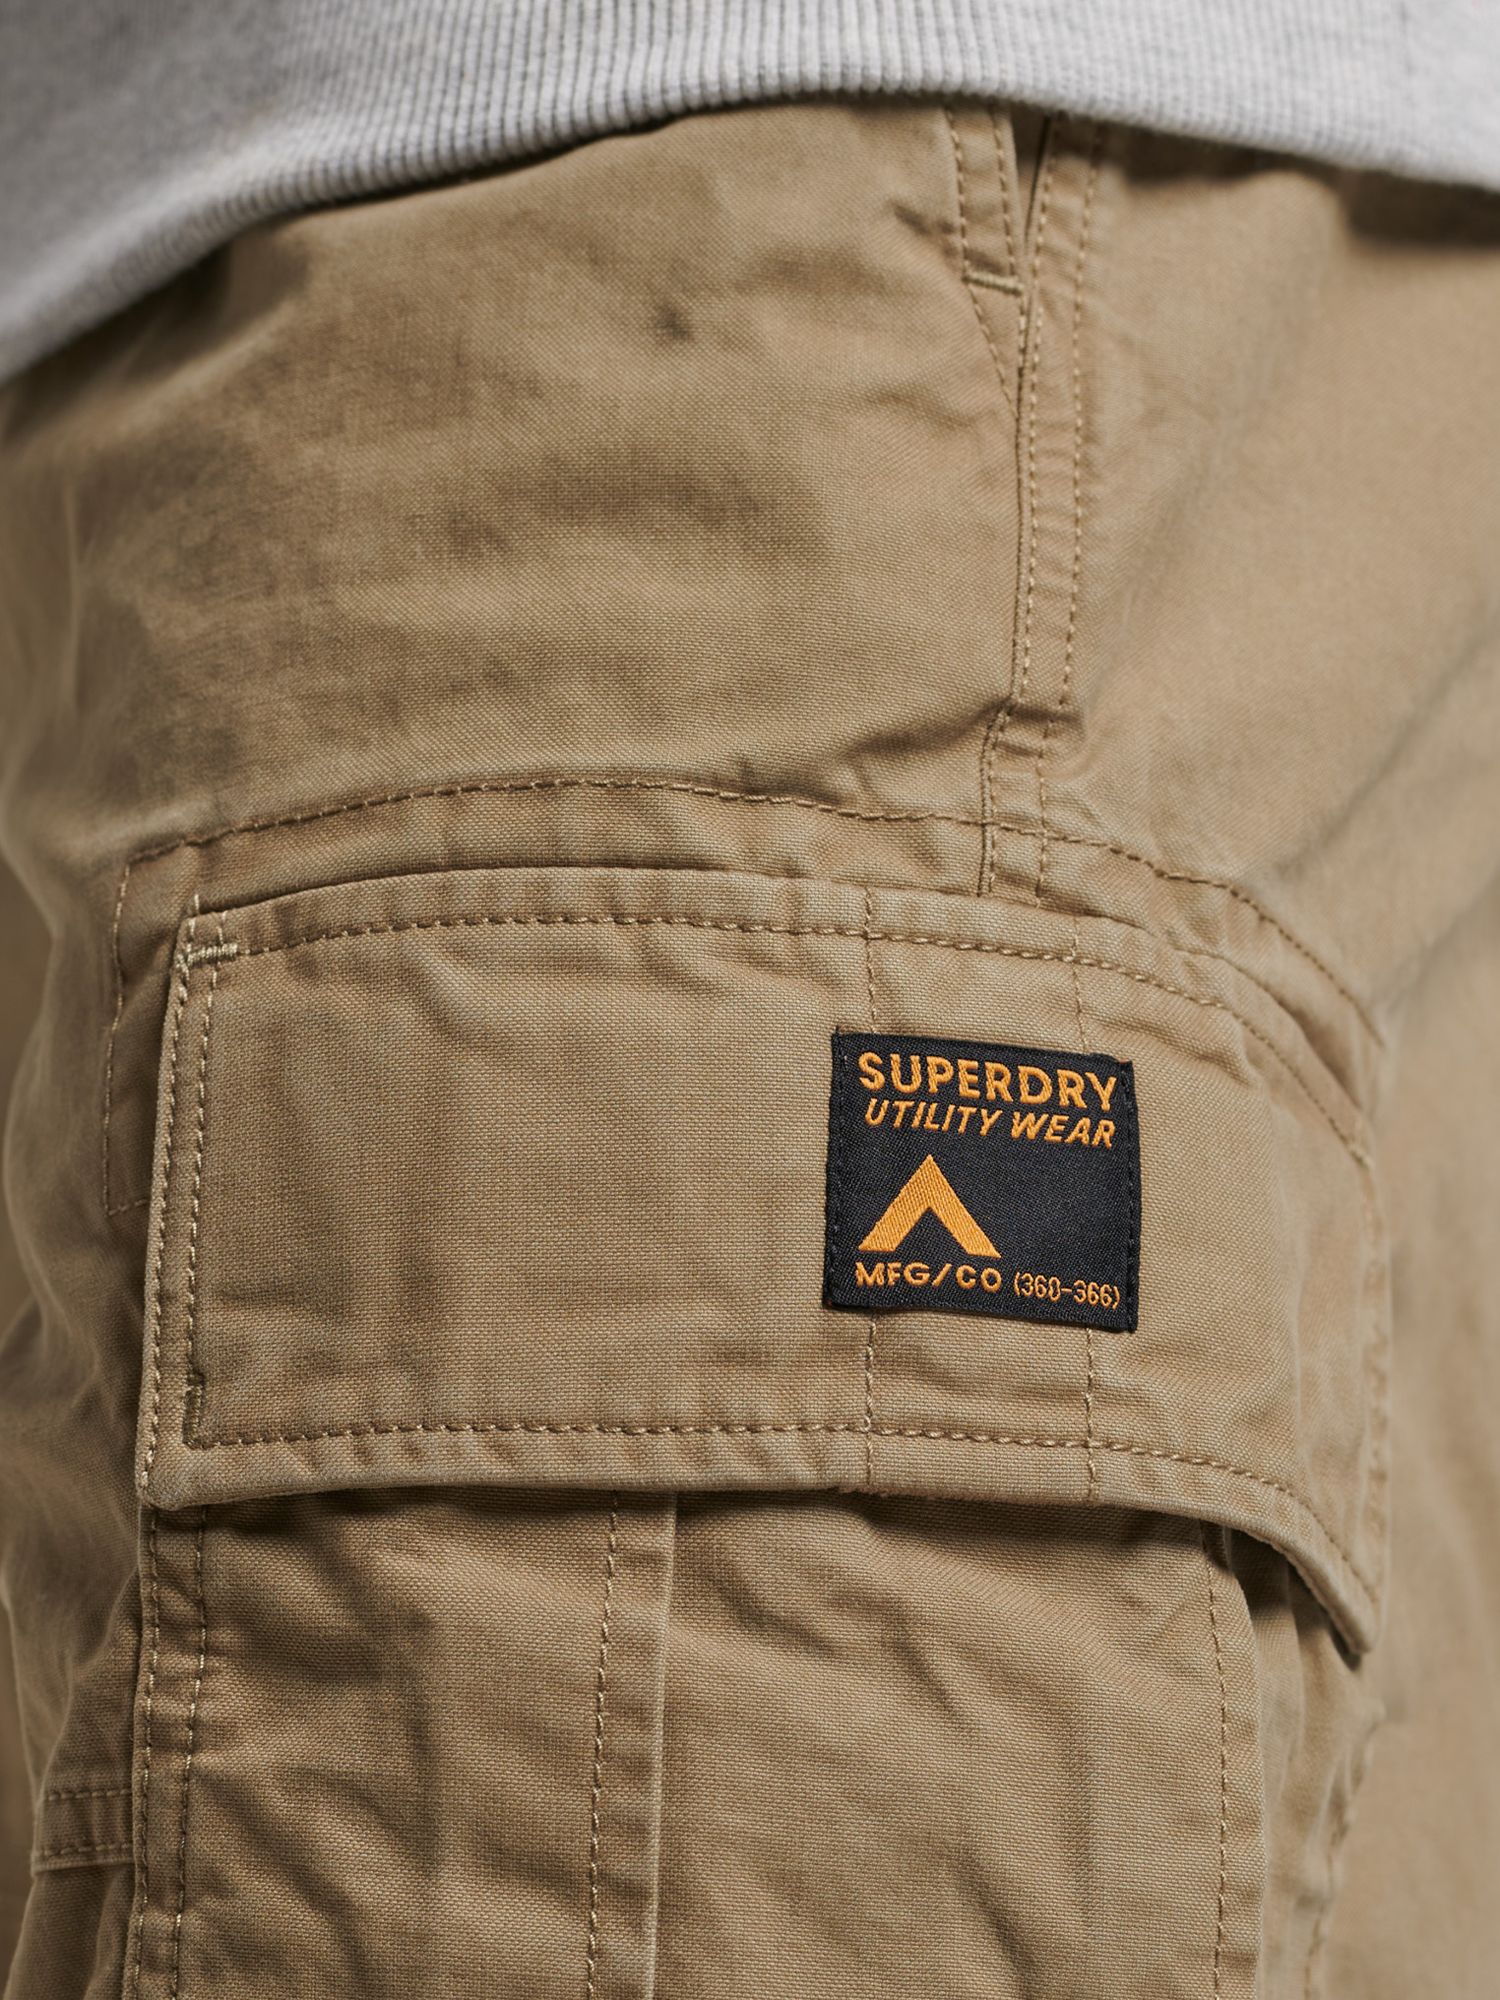 Superdry Heavy Cargo Shorts, Dress Beige, 36R